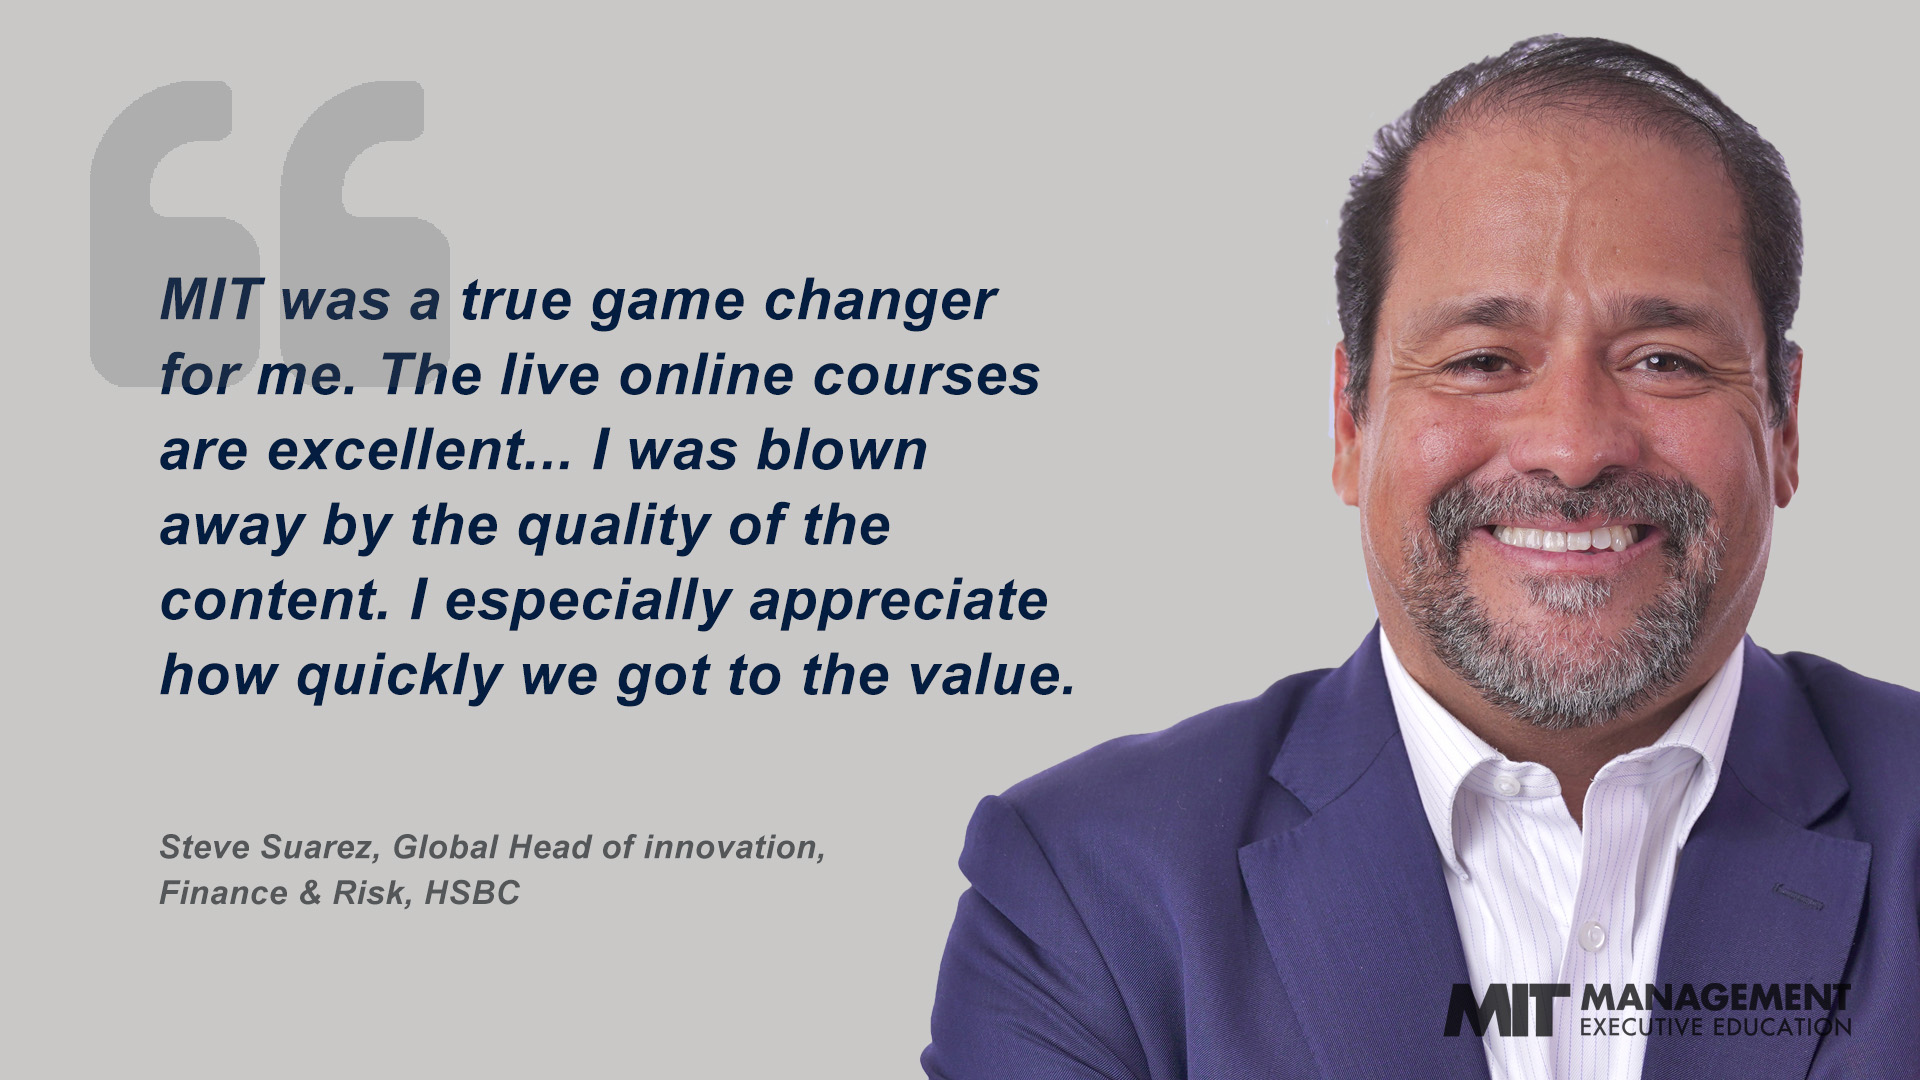 Steve Suarez, Global Head of Innovation